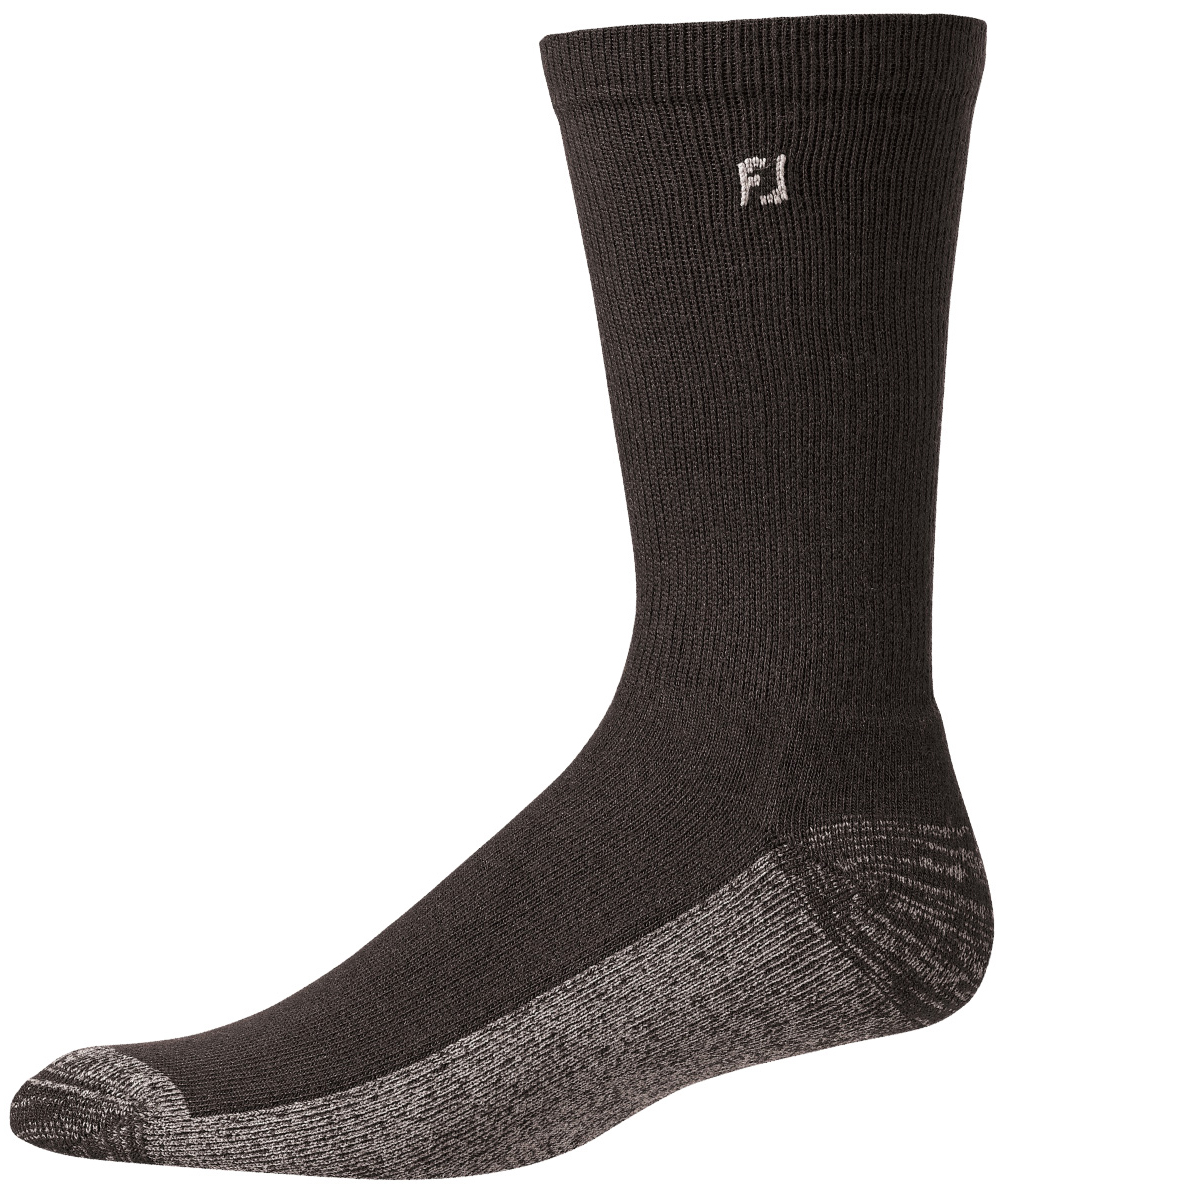 FootJoy ProDry Crew Socks from american golf